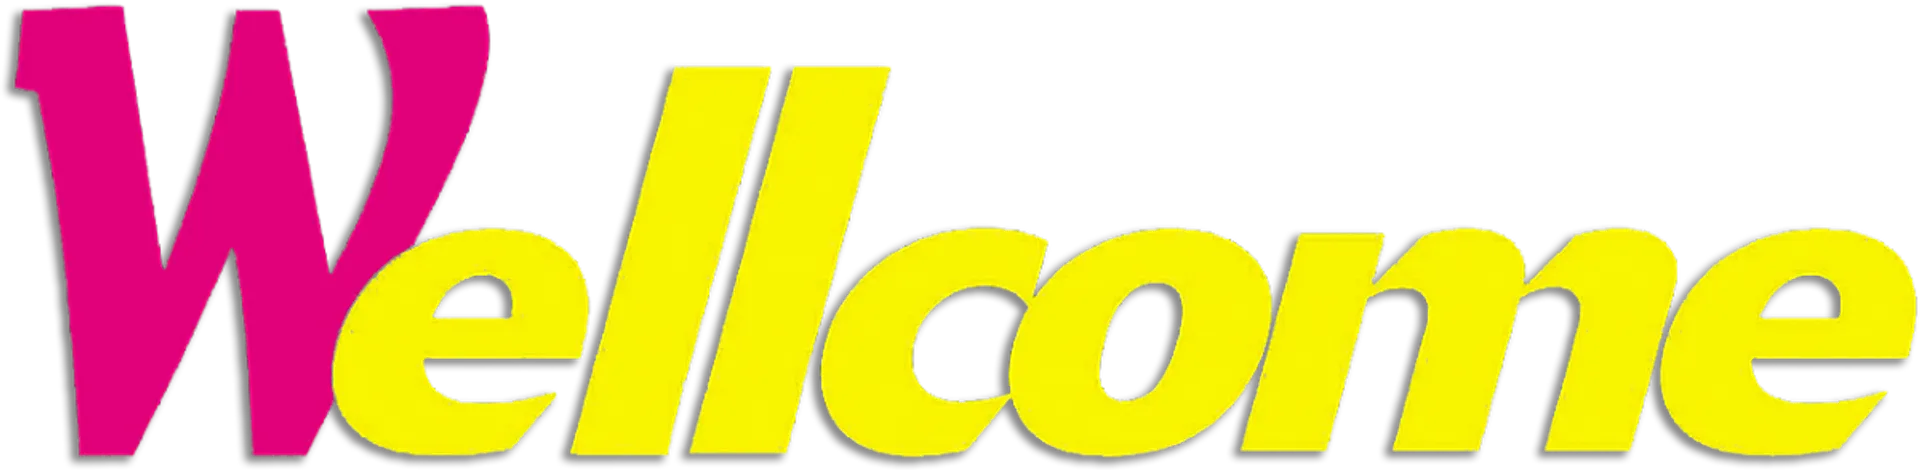 WELLCOME logo